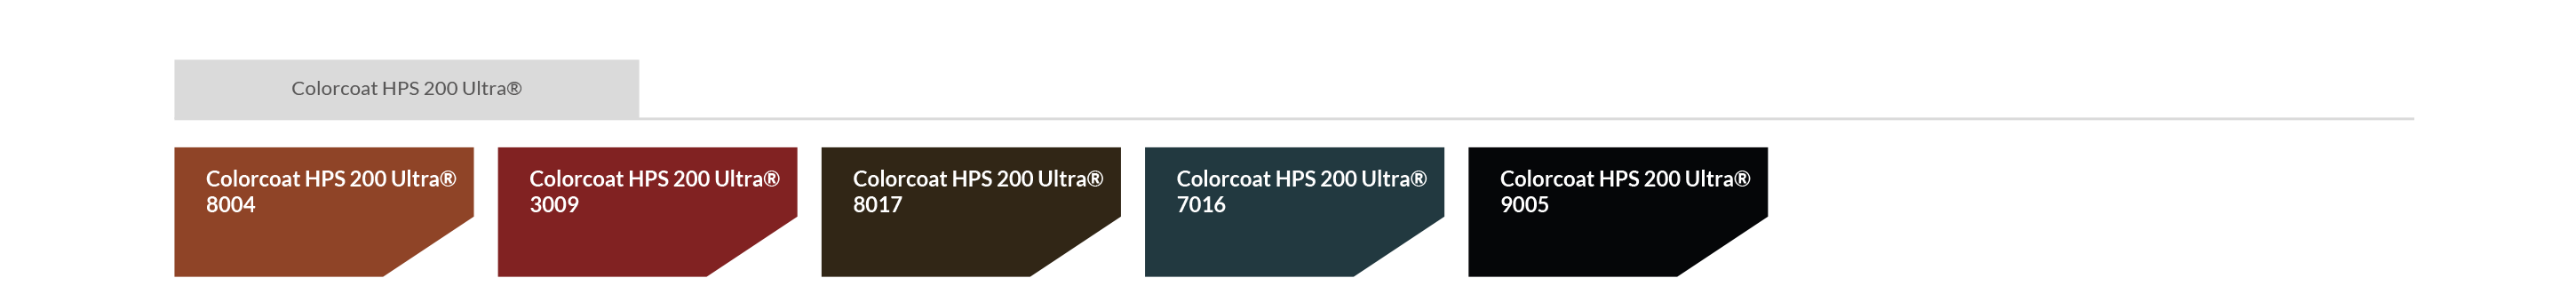 Colorcoat HPS 200 Ultra